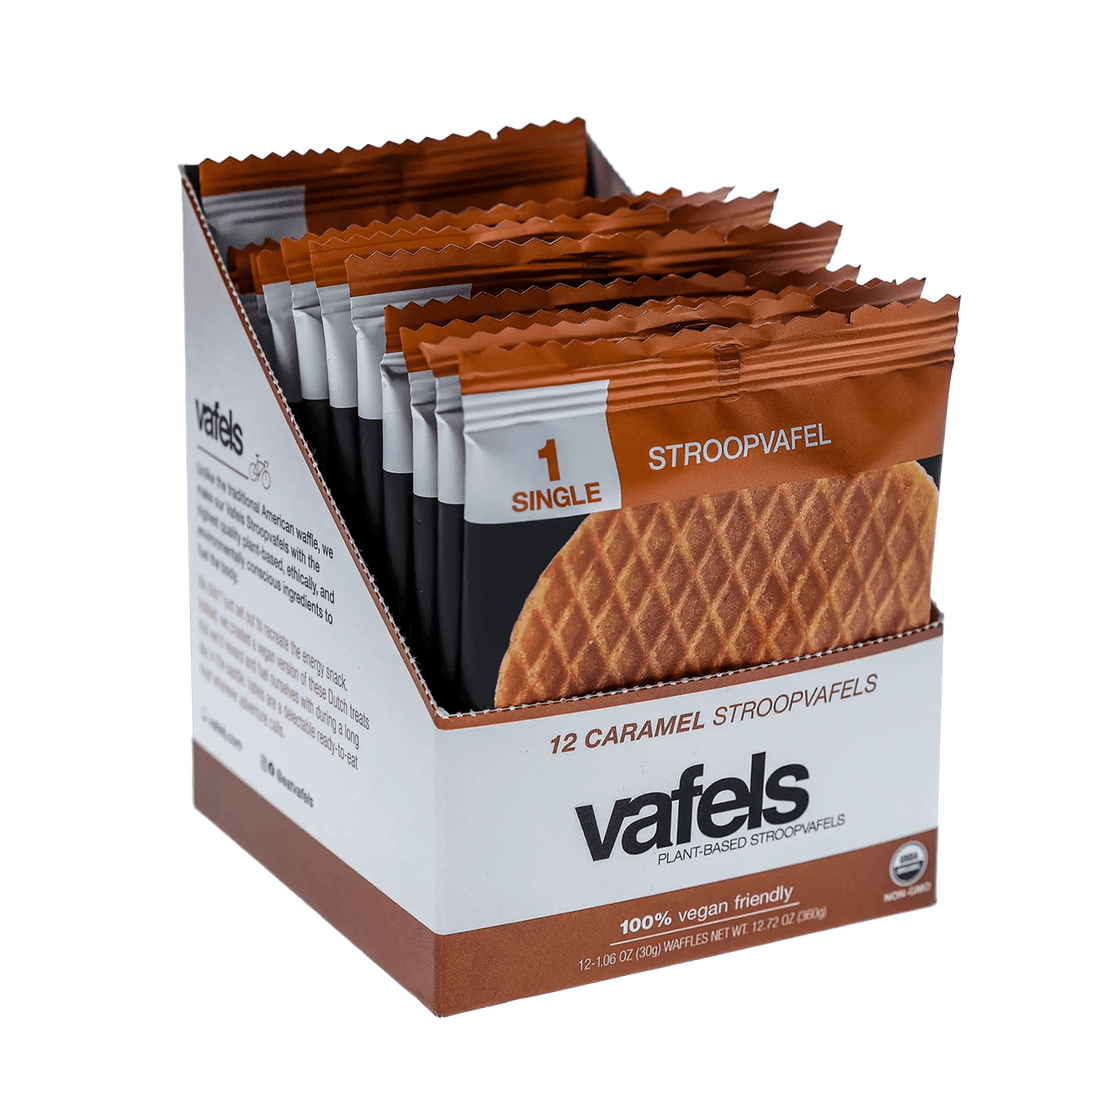 Caramel Stroopvafels - Box of 12 - Vafels